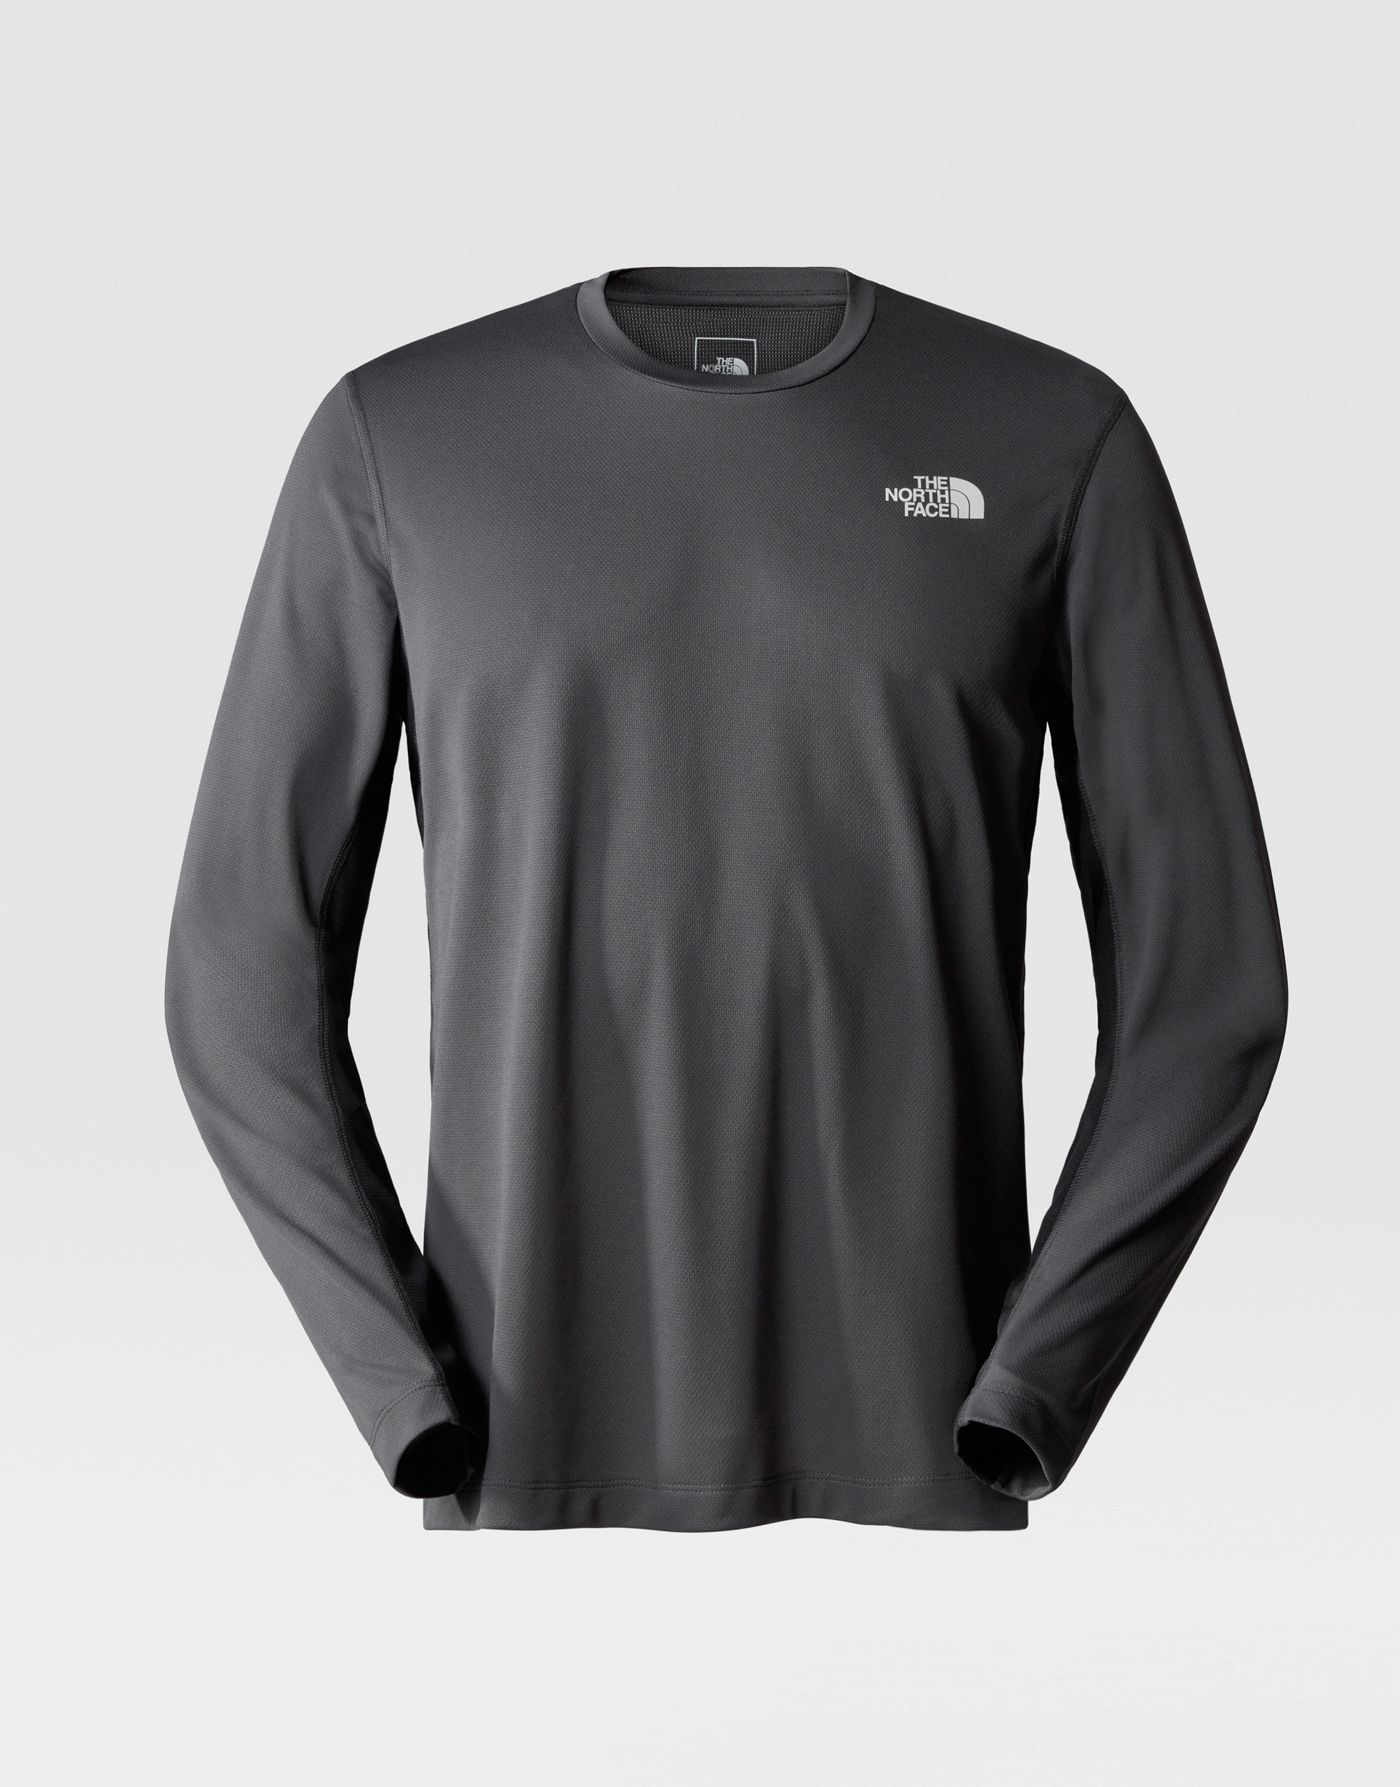 The North Face Lightbright long-sleeve t-shirt in asphalt grey-tnf black